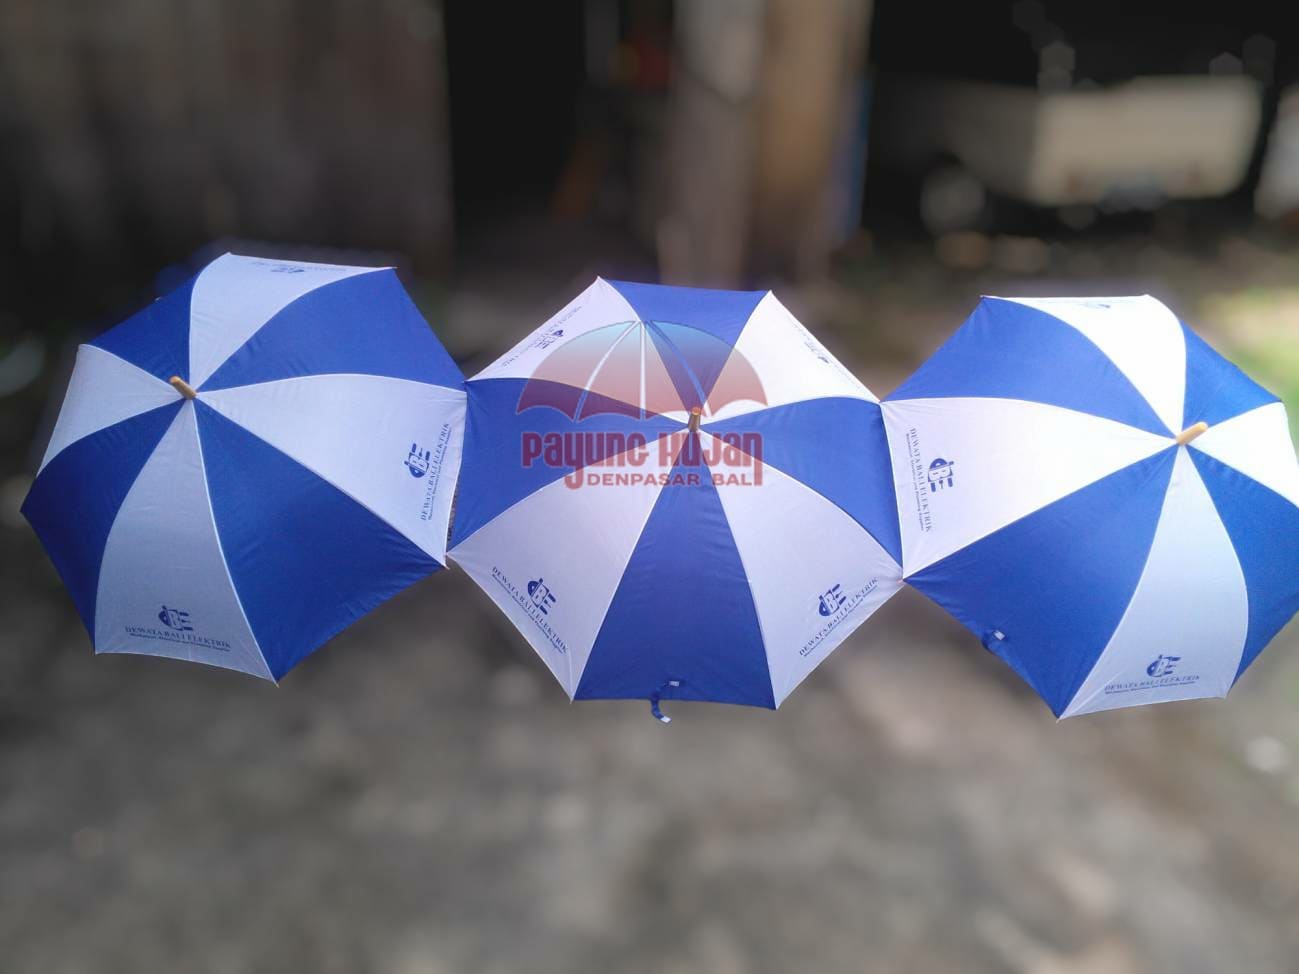 payung promosi dewata bali elektrik